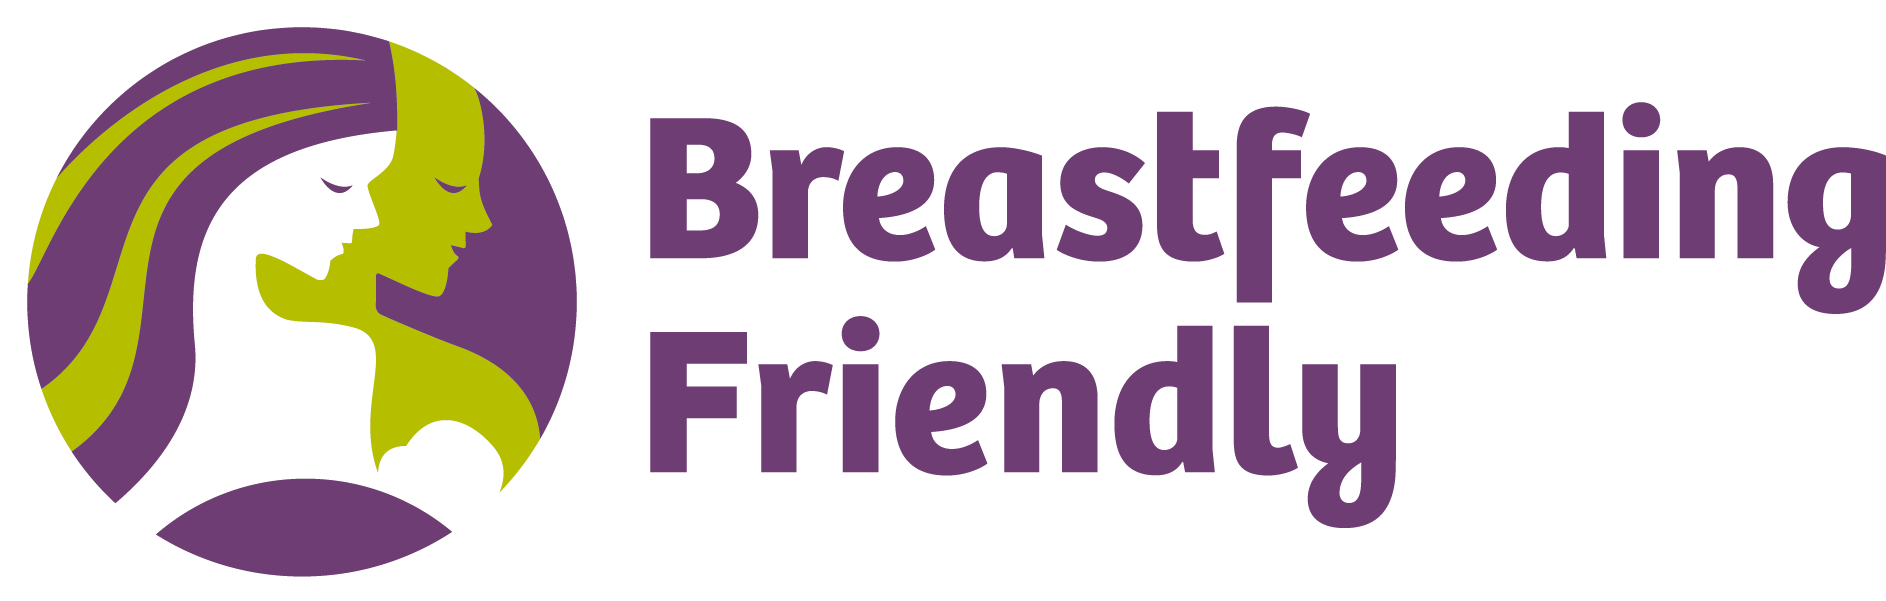 Friendly Logo - BfN Breastfeeding Friendly Scheme - The Breastfeeding Network